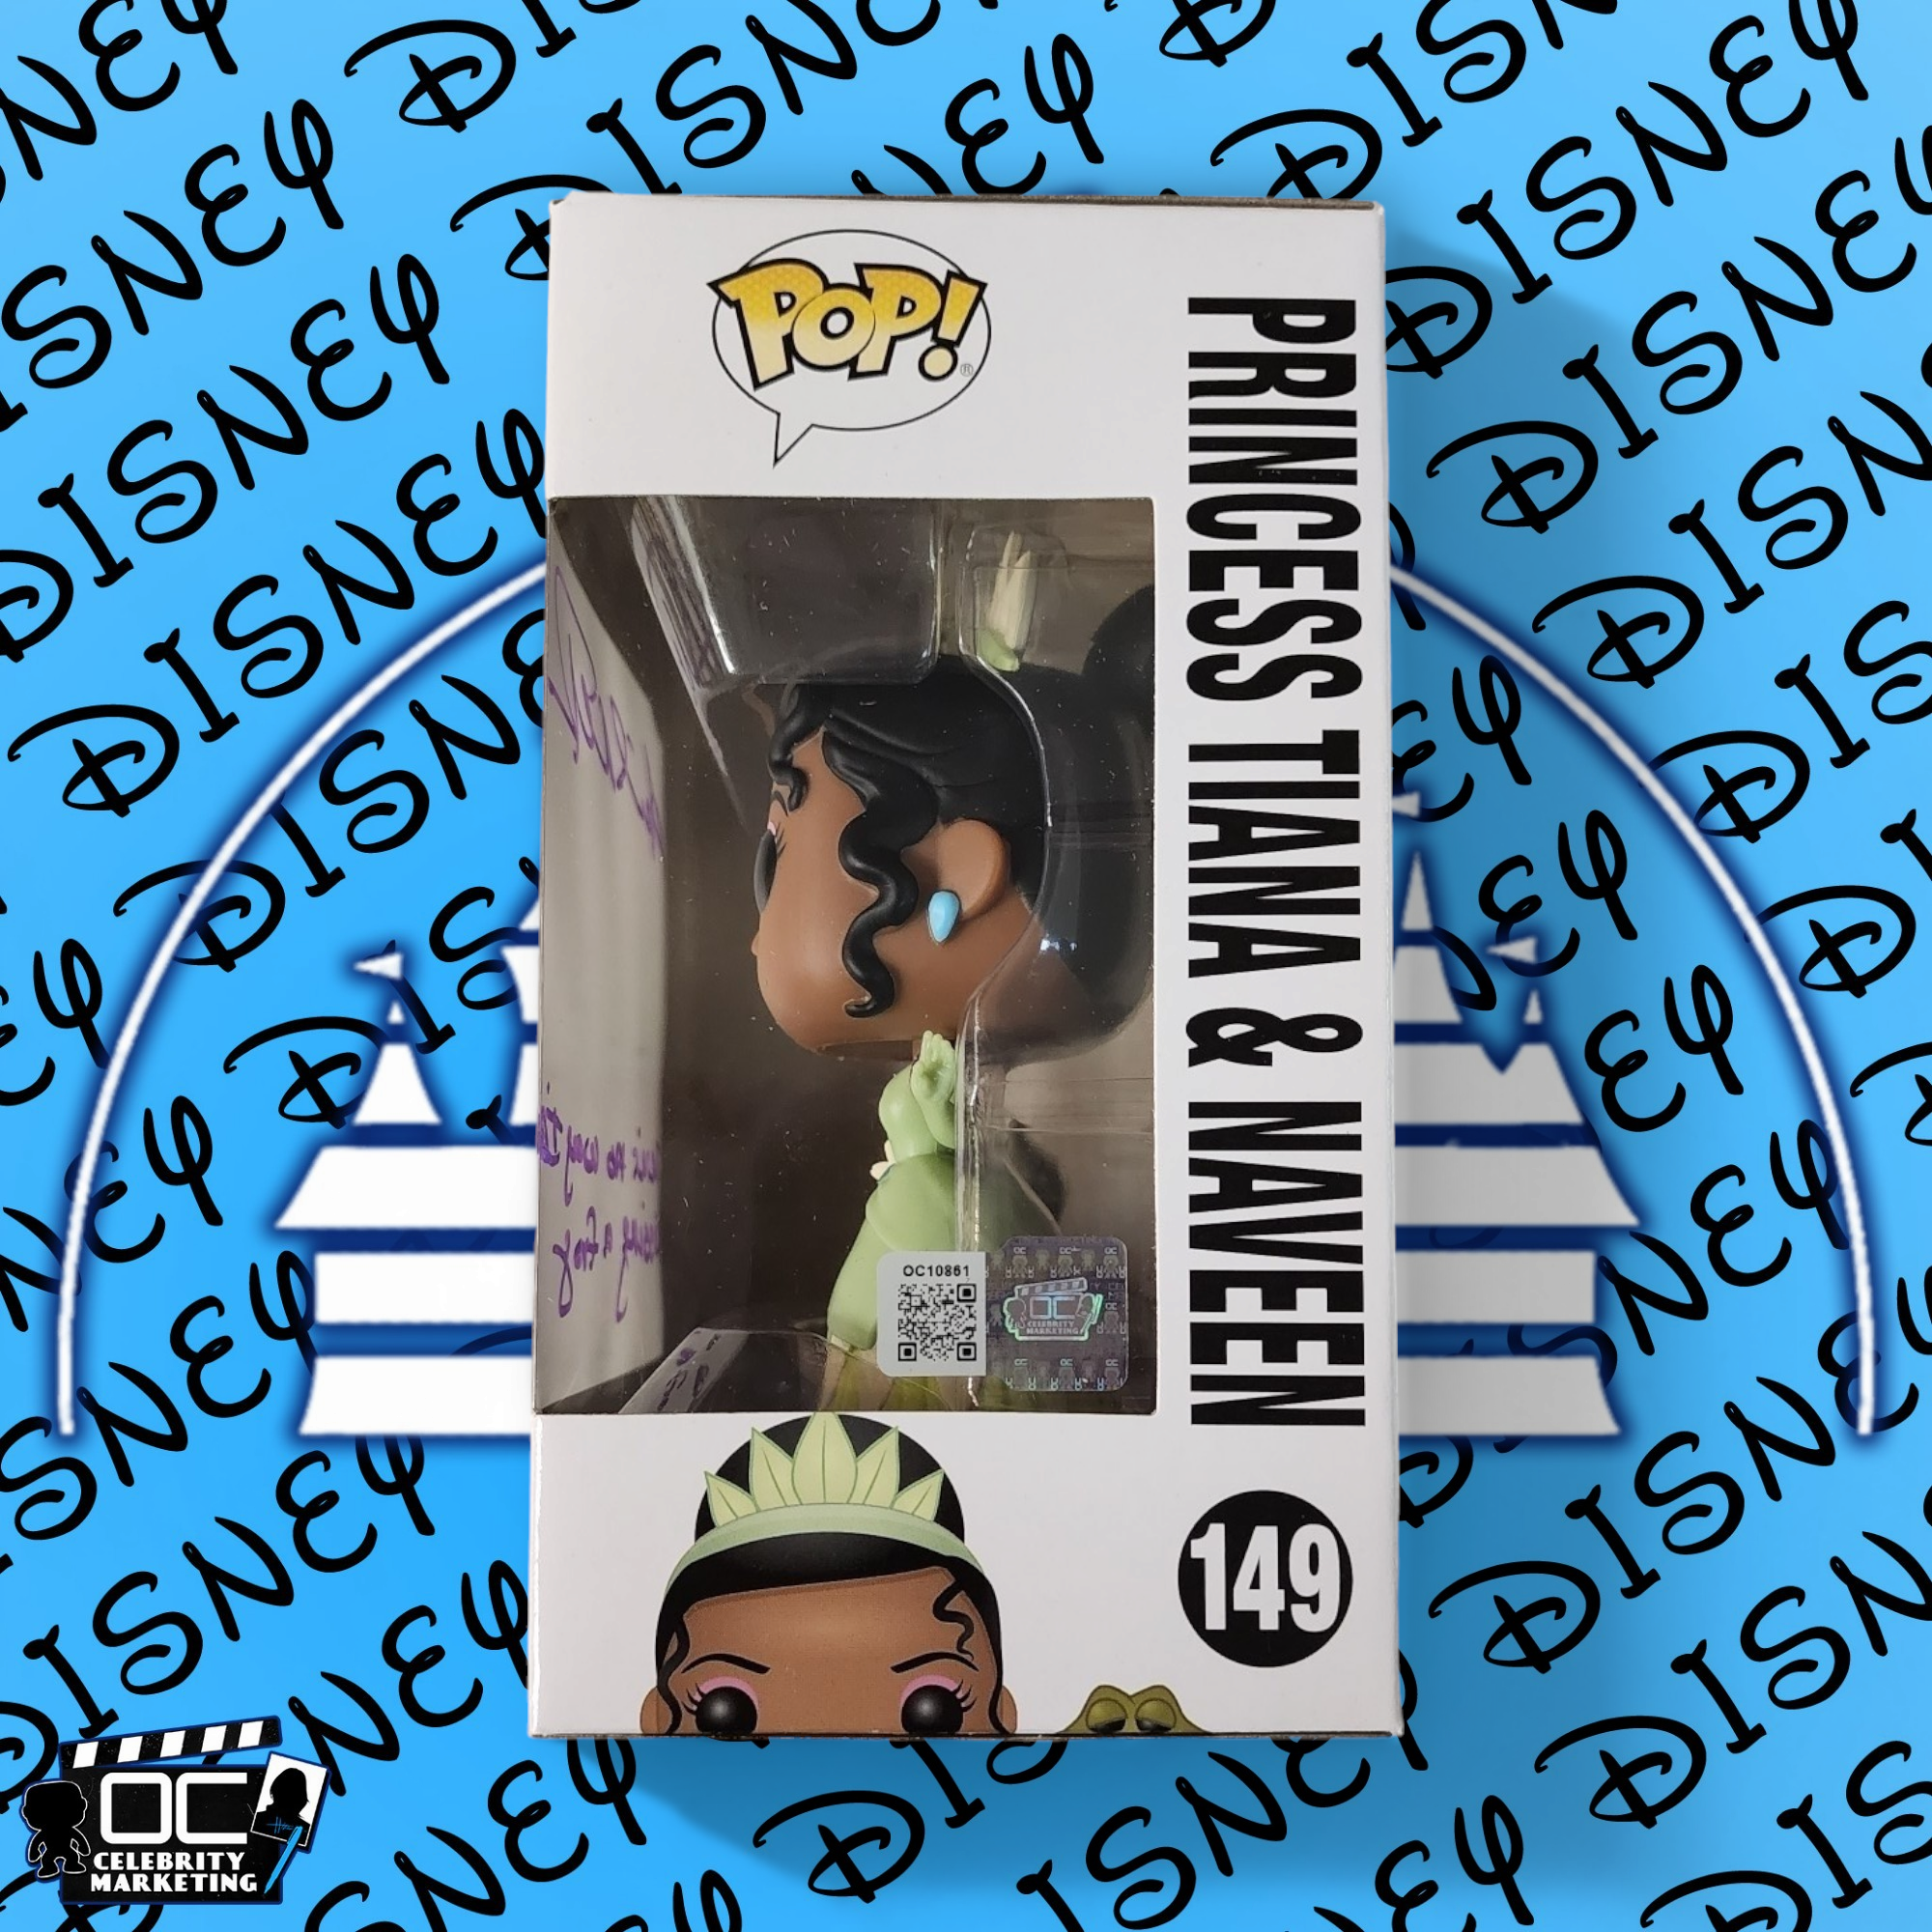 Anika Noni Rose signed Disney Princess Tiana & Naveen Funko #149 OCCM – OC  Celebrity Marketing LLC